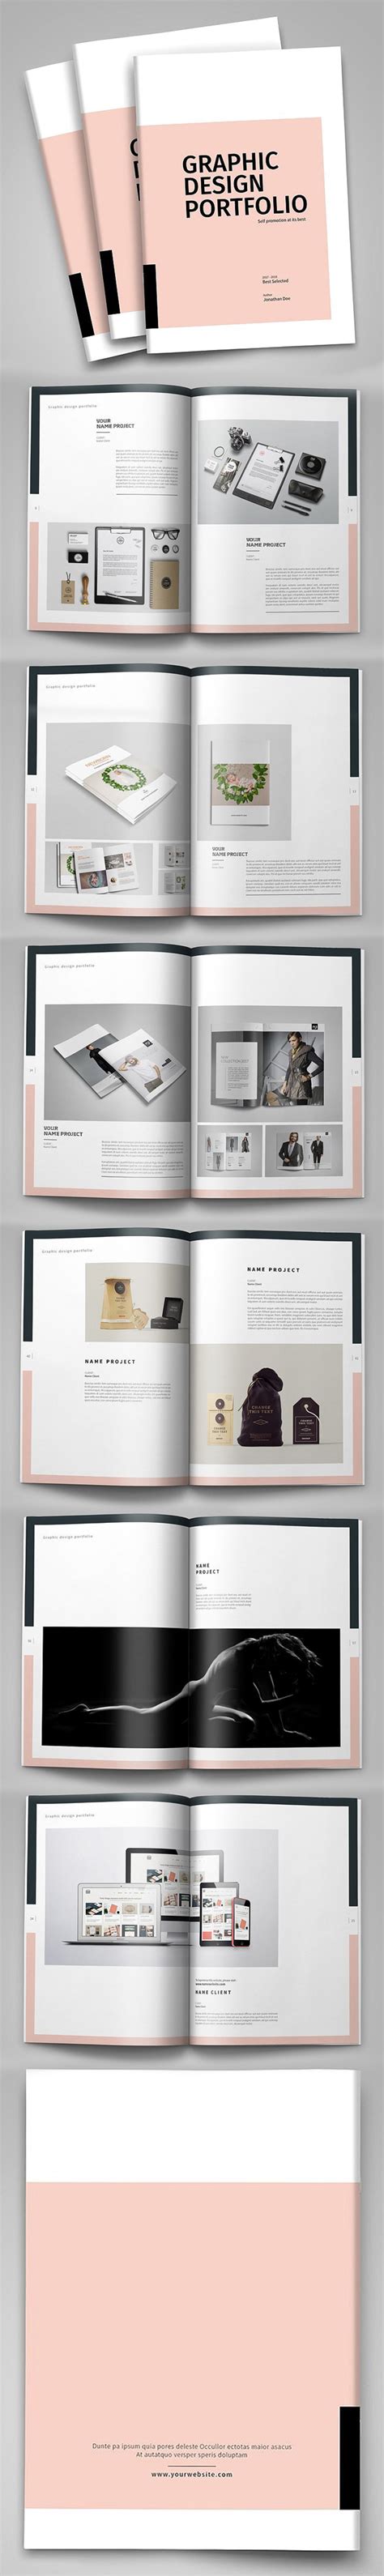 Professional Graphic Design Portfolio Website ~ Froya Design